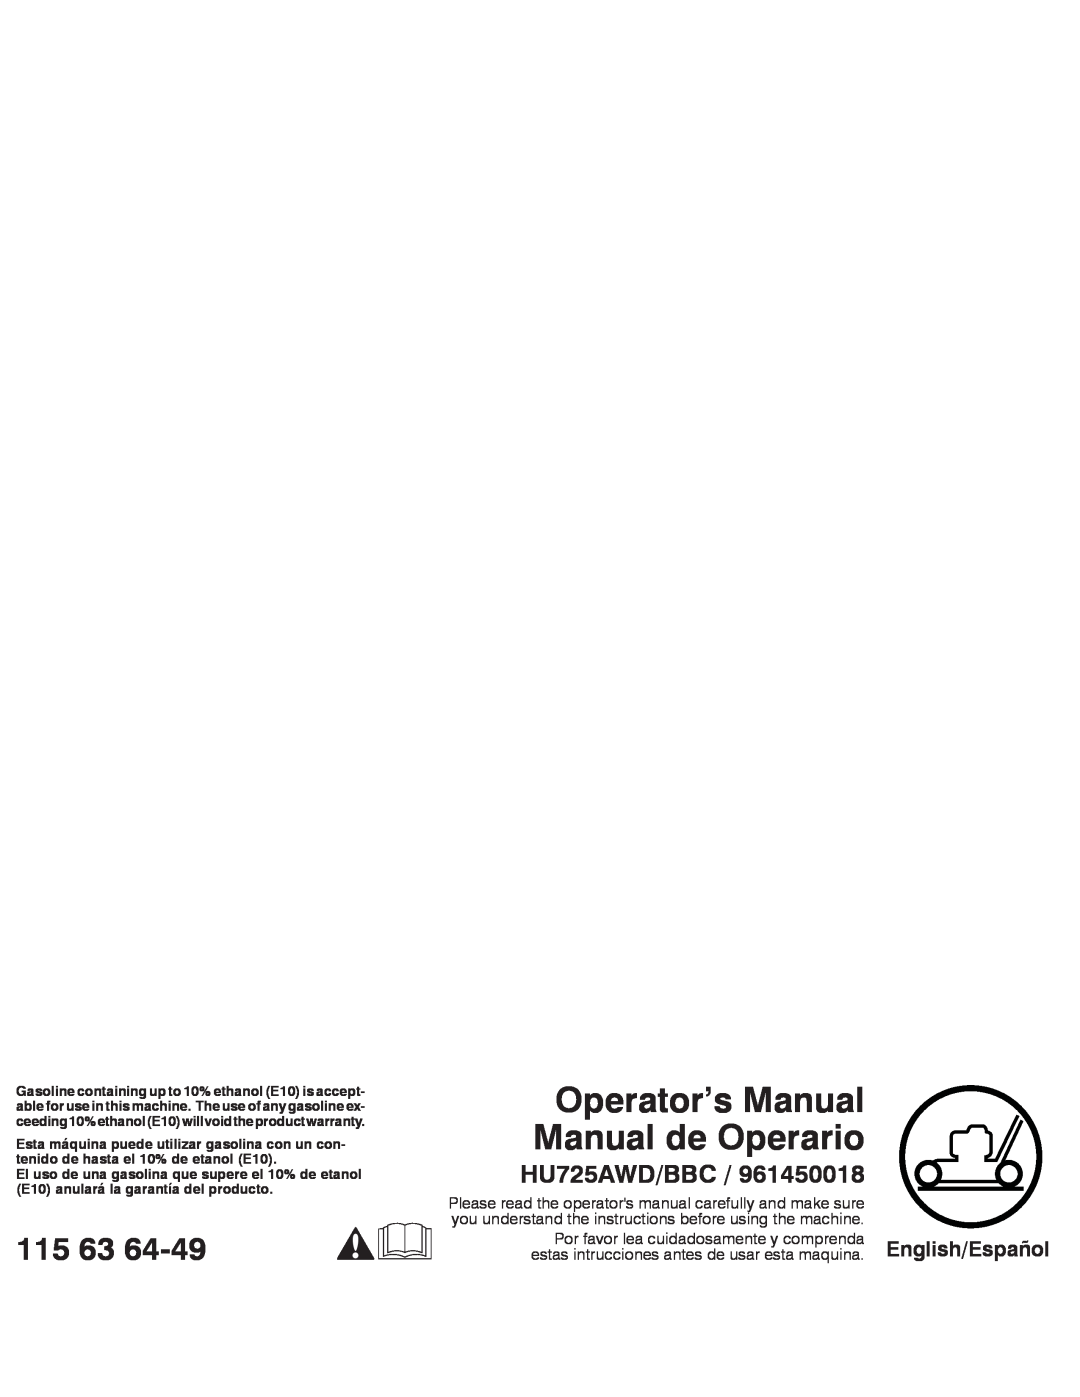 Husqvarna 961430104, 961430103 warranty HU725AWD/BBC, Operator’s Manual Manual de Operario, 115, English/Español 